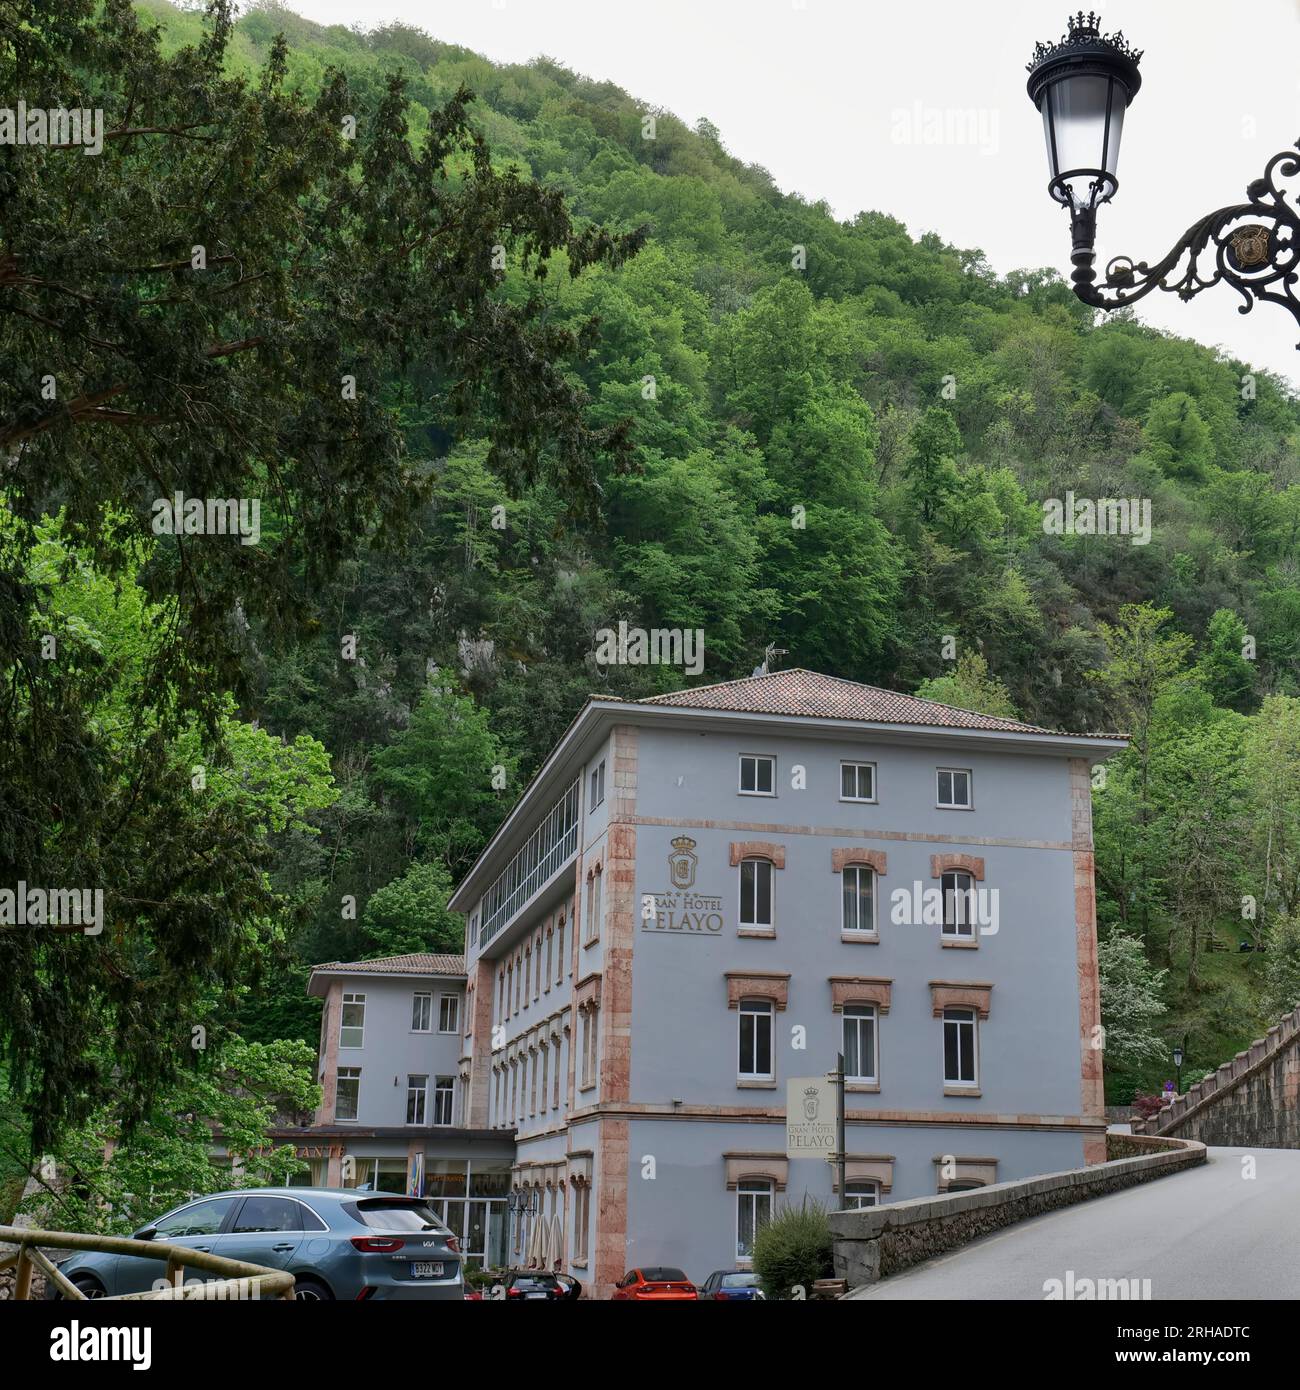 ARCEA Gran Hotel Pelayo, Real Sitio de Covadonga, Picos de Europa, Asturien, Spanien, Europa Stockfoto